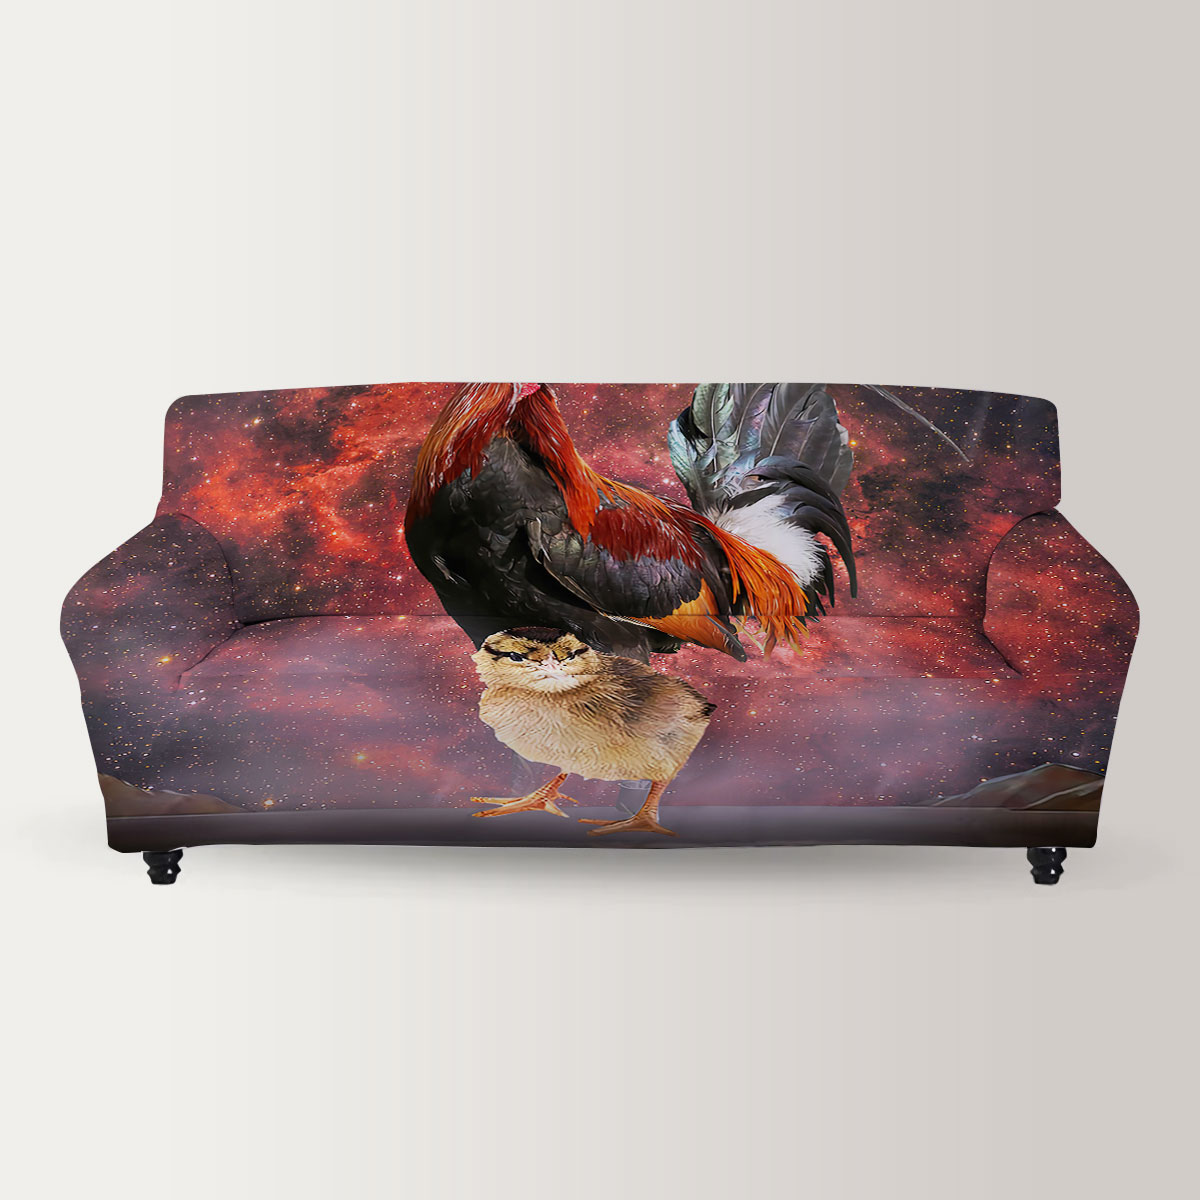 Galaxy Chicken Sofa Cover_2_1